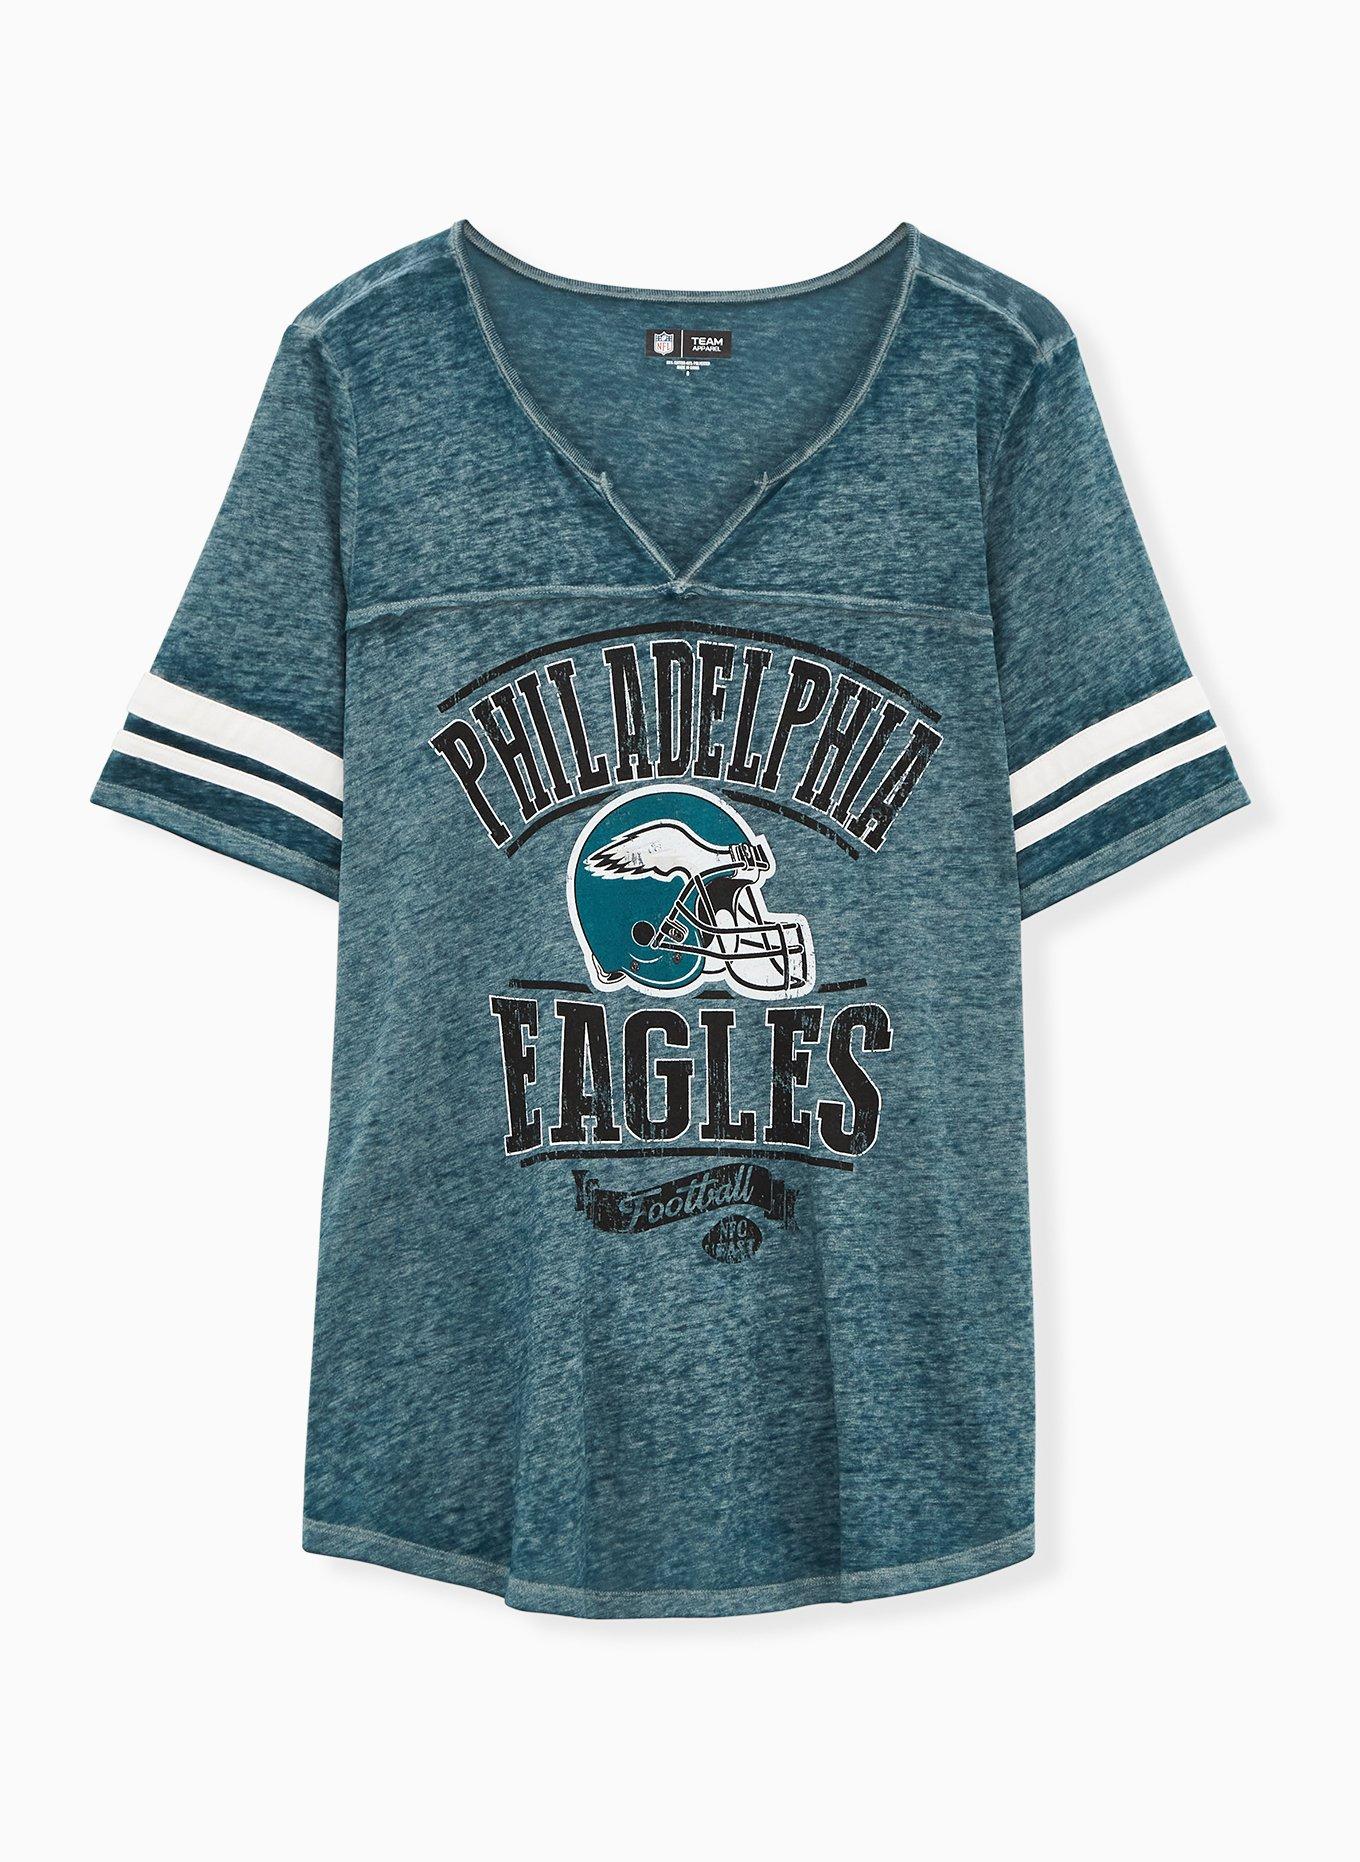 Vintage Philadelphia Eagles shirts, hats, hoodies and apparel - Shibe  Vintage Sports